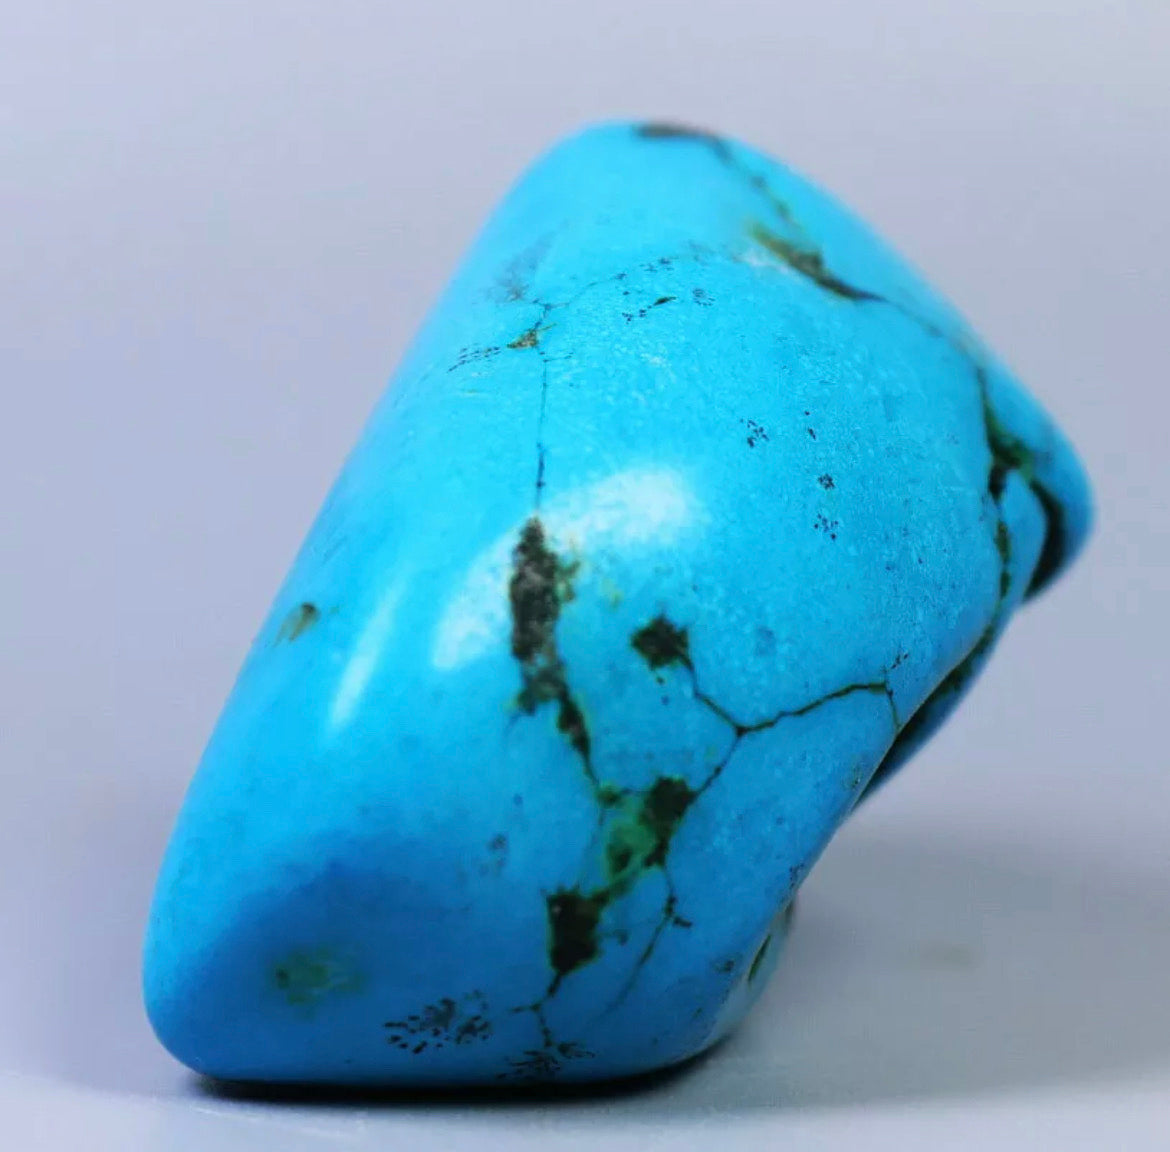 Blue turquoise gemstone rough stone Crystal mineral specimen